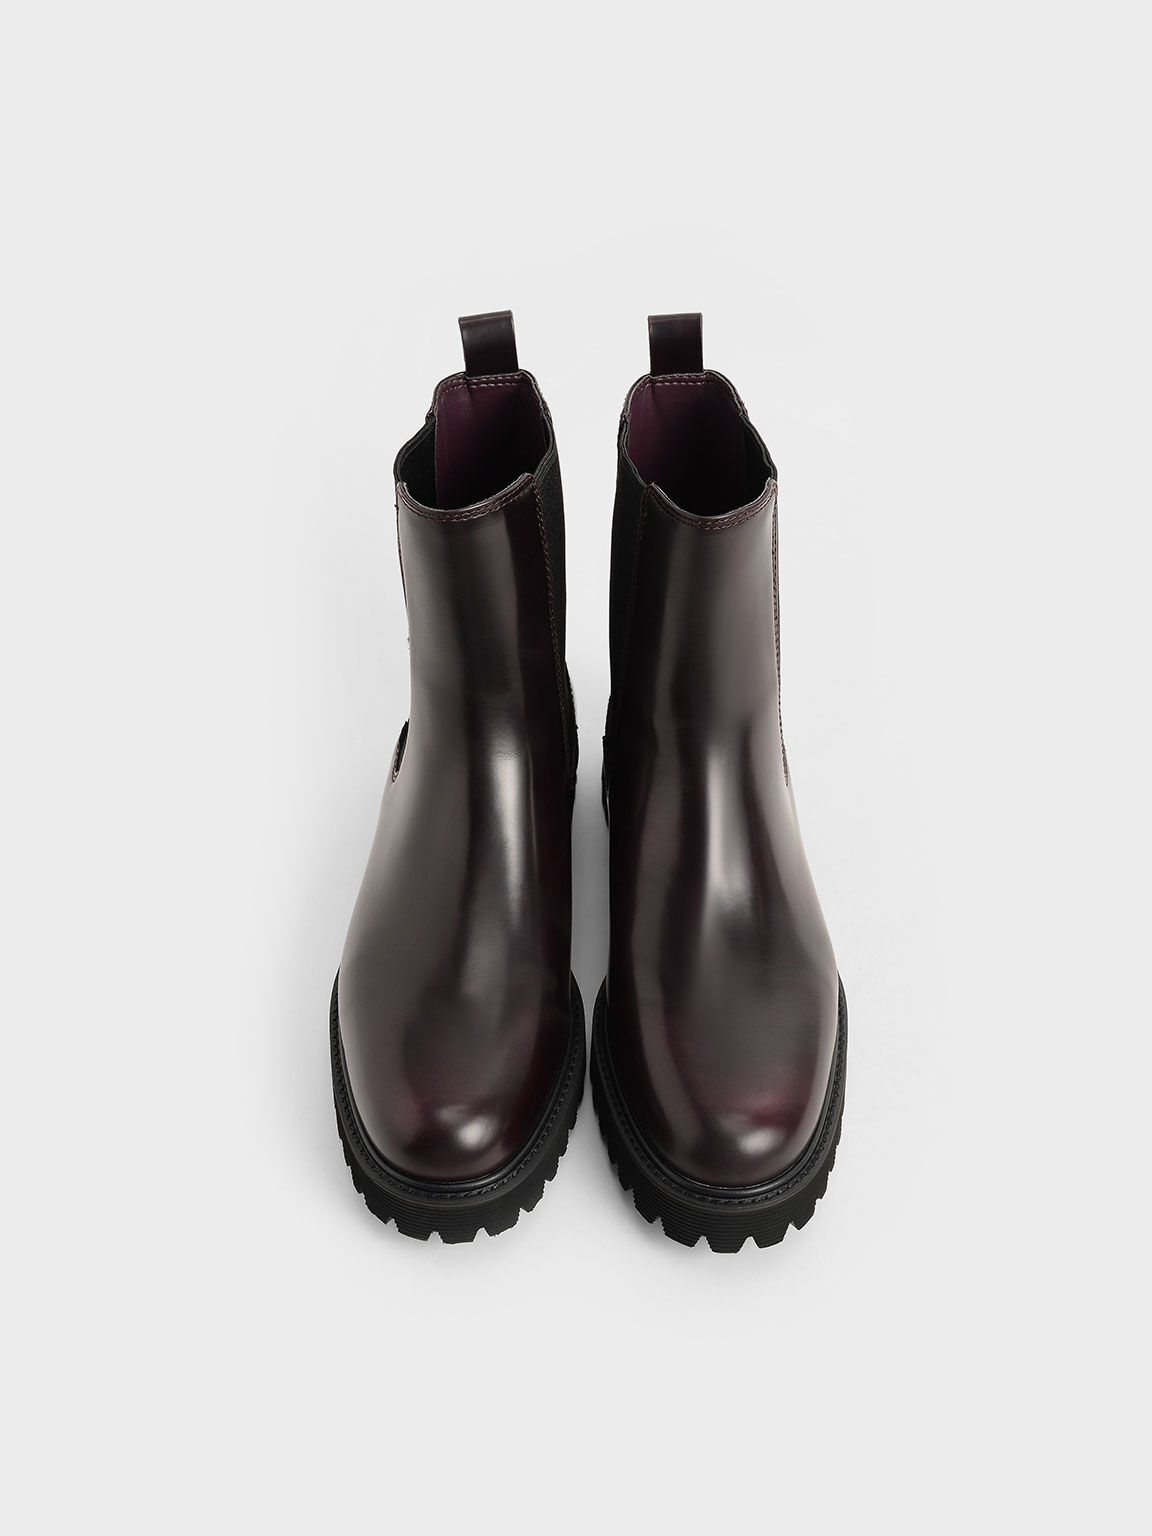 Chelsea Boots, Burgundy, hi-res